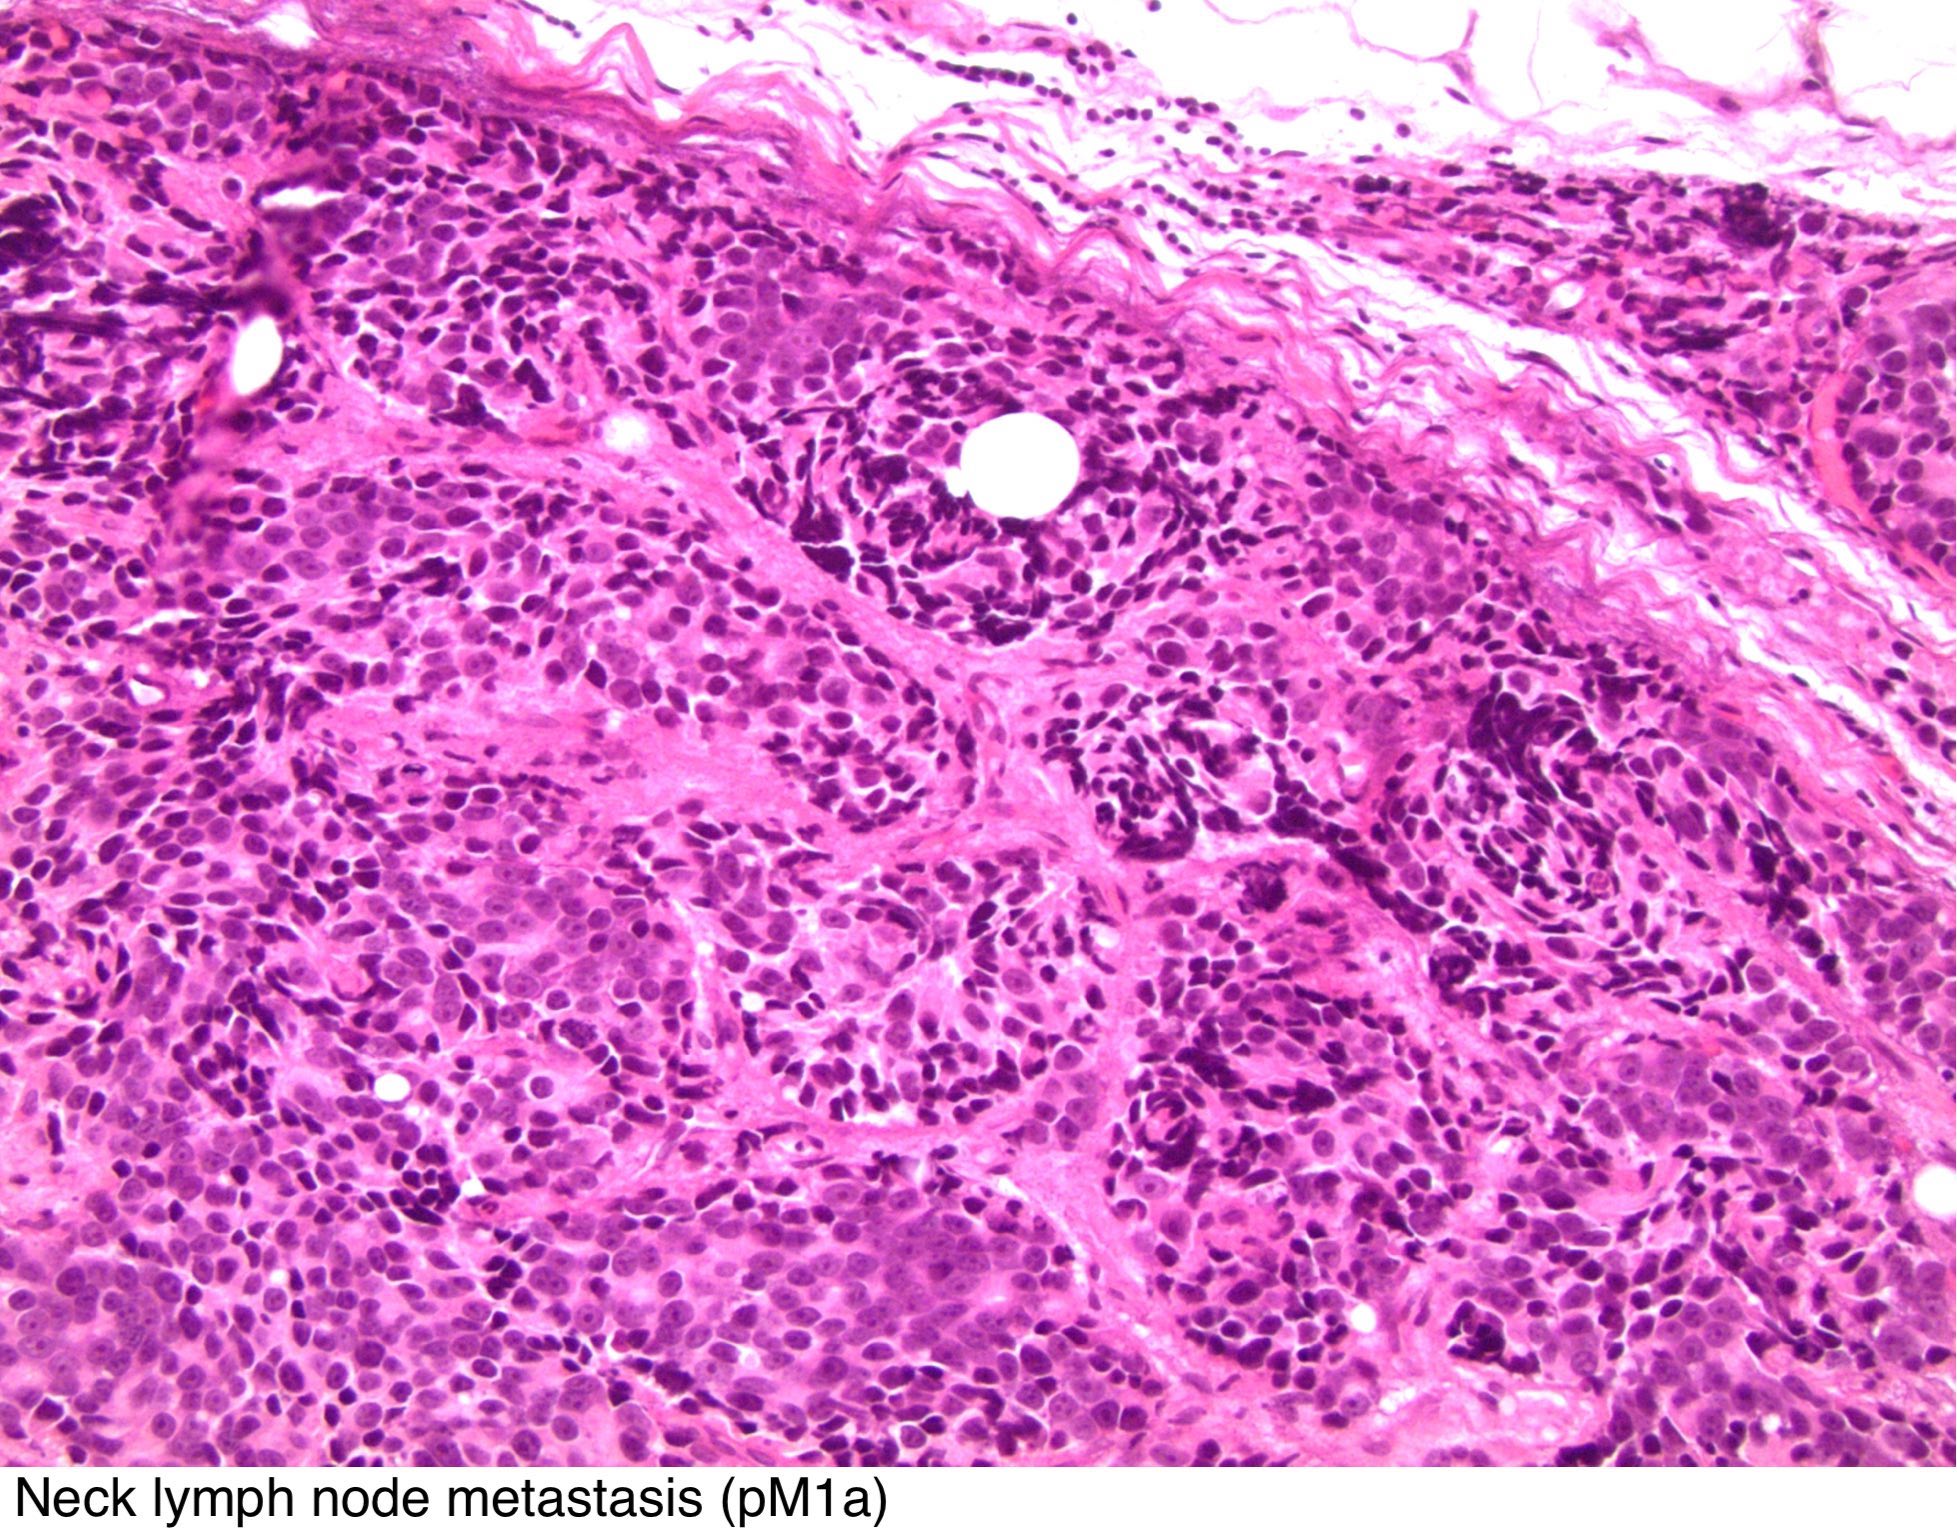 Adenocarcinoma prostate gleason score 7 treatment - Colon cancer stage pathology outlines